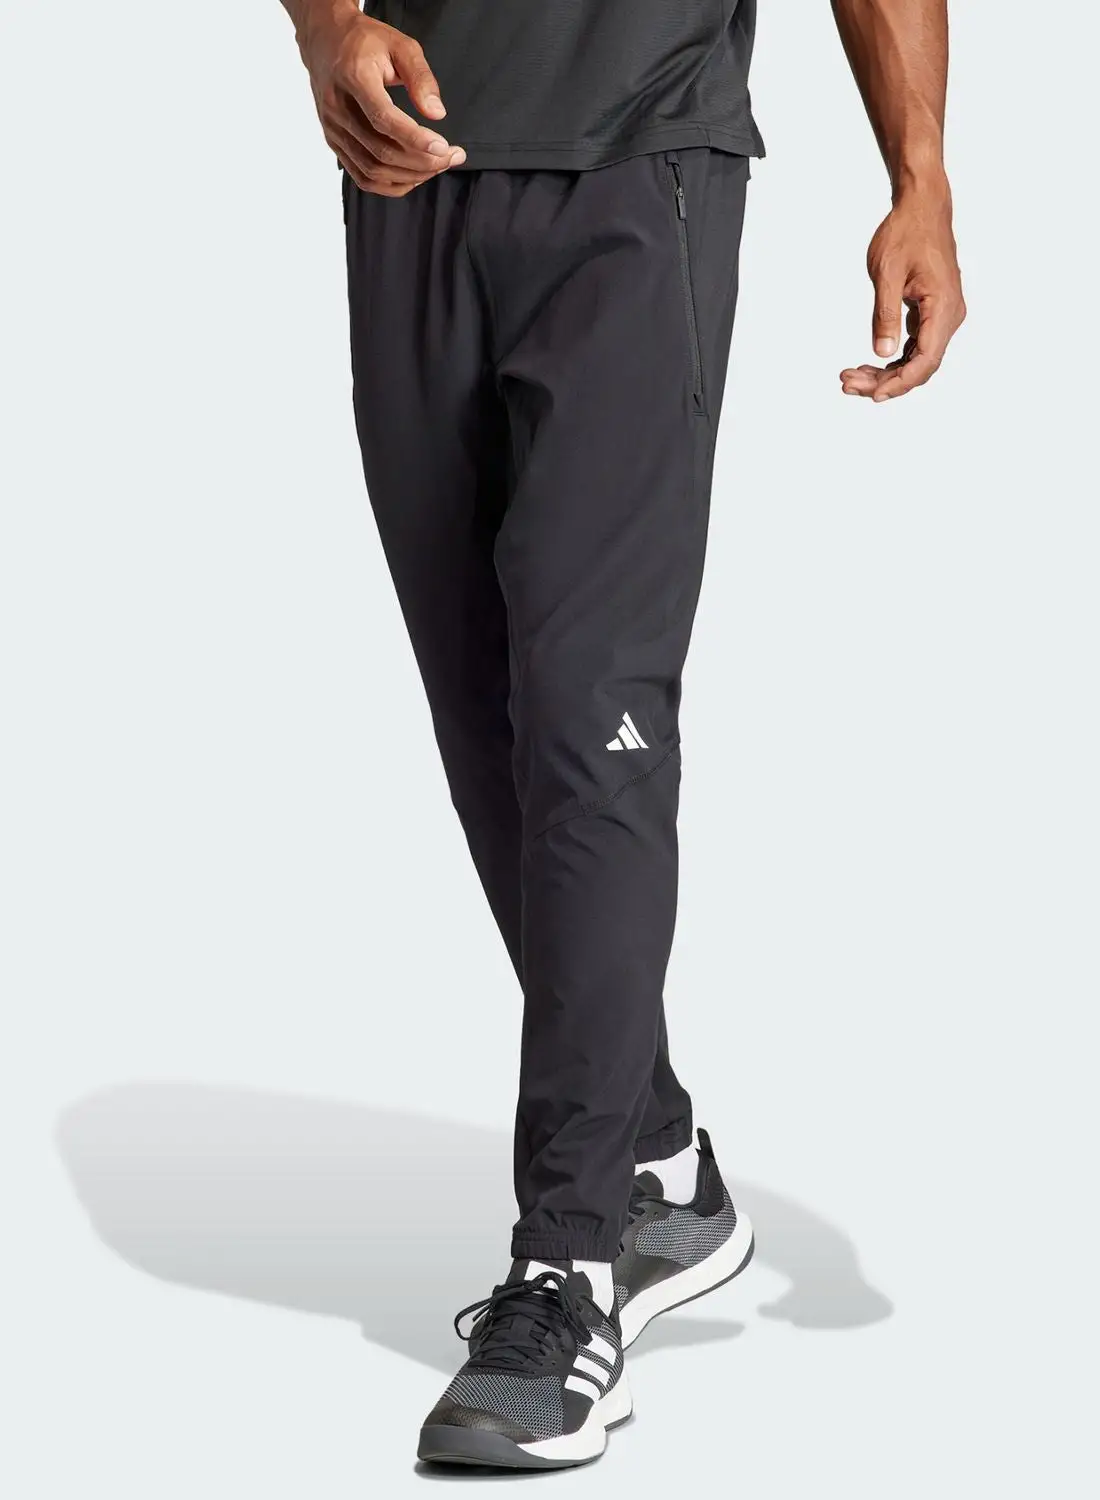 Adidas Designed For Training Sweatpants